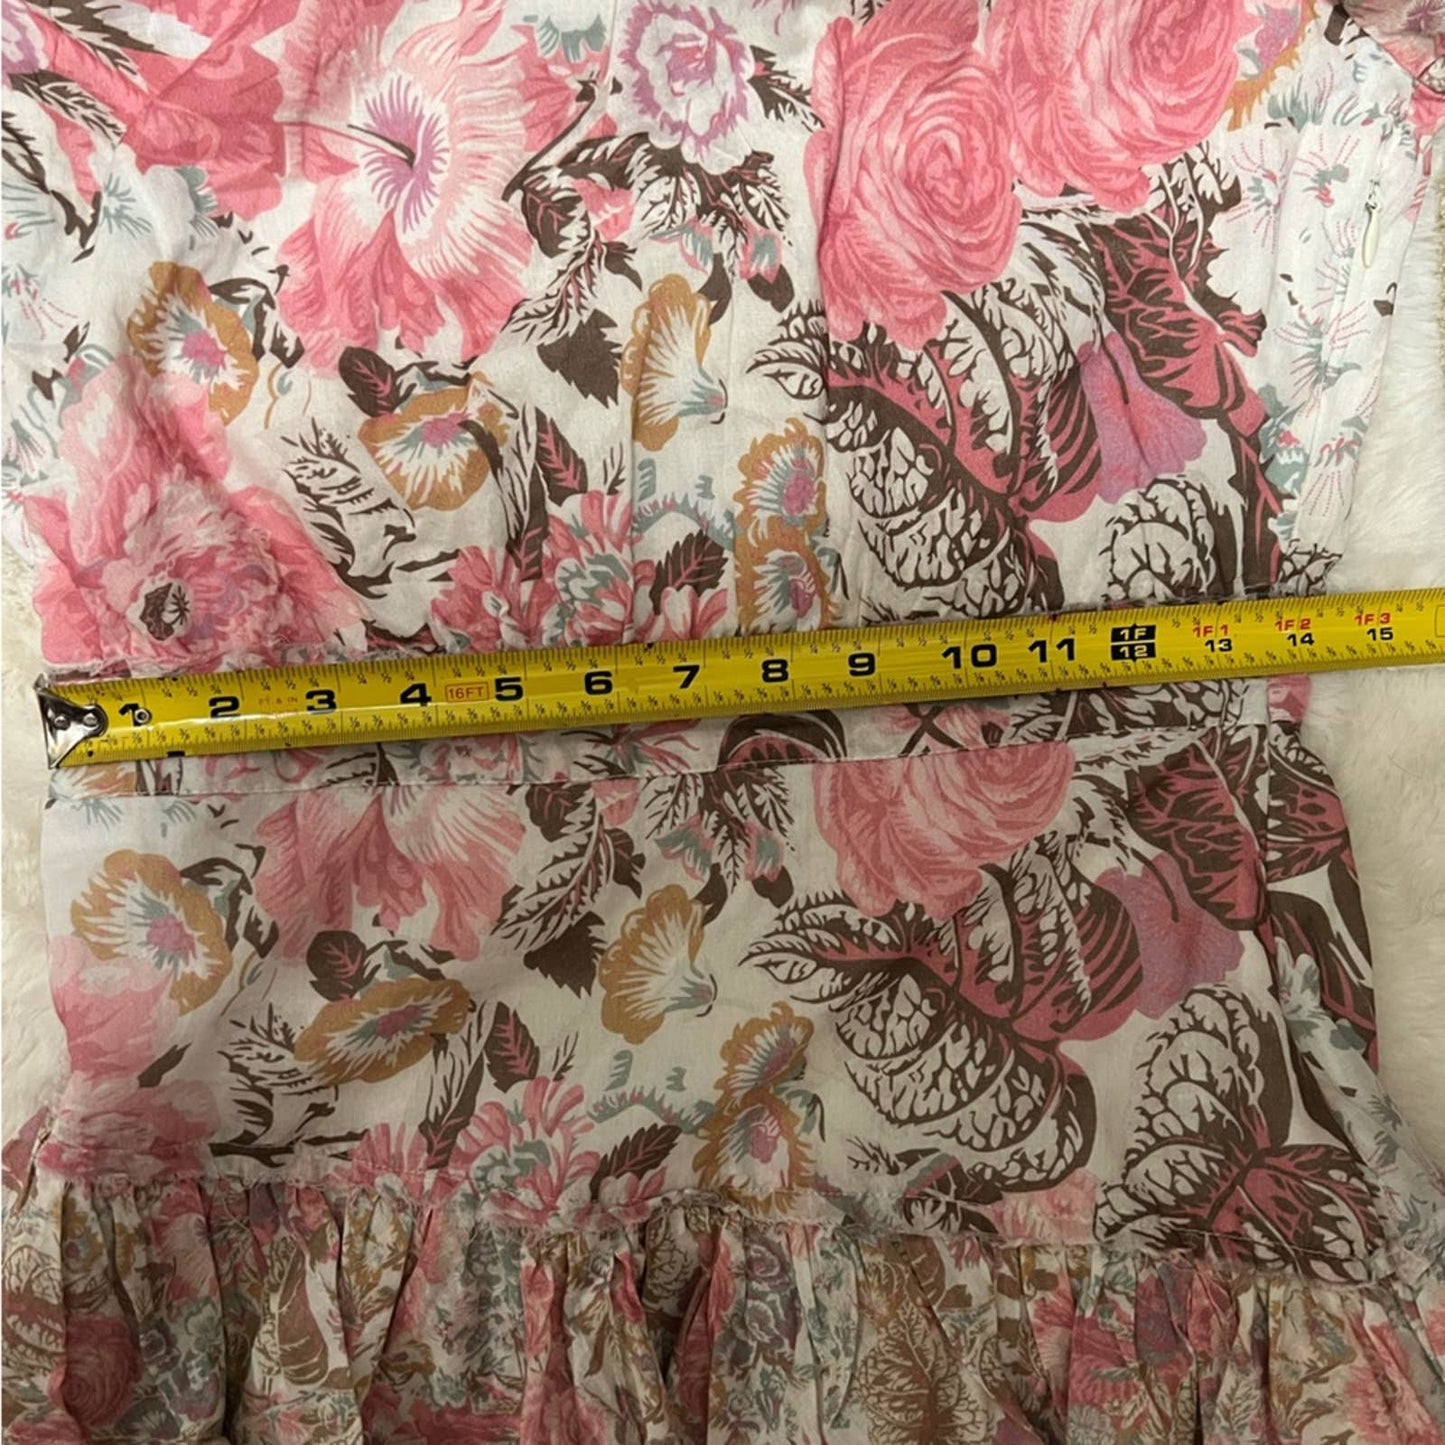 LOVE SHACK FANCY Pink Floral Tiered Short Dress 4